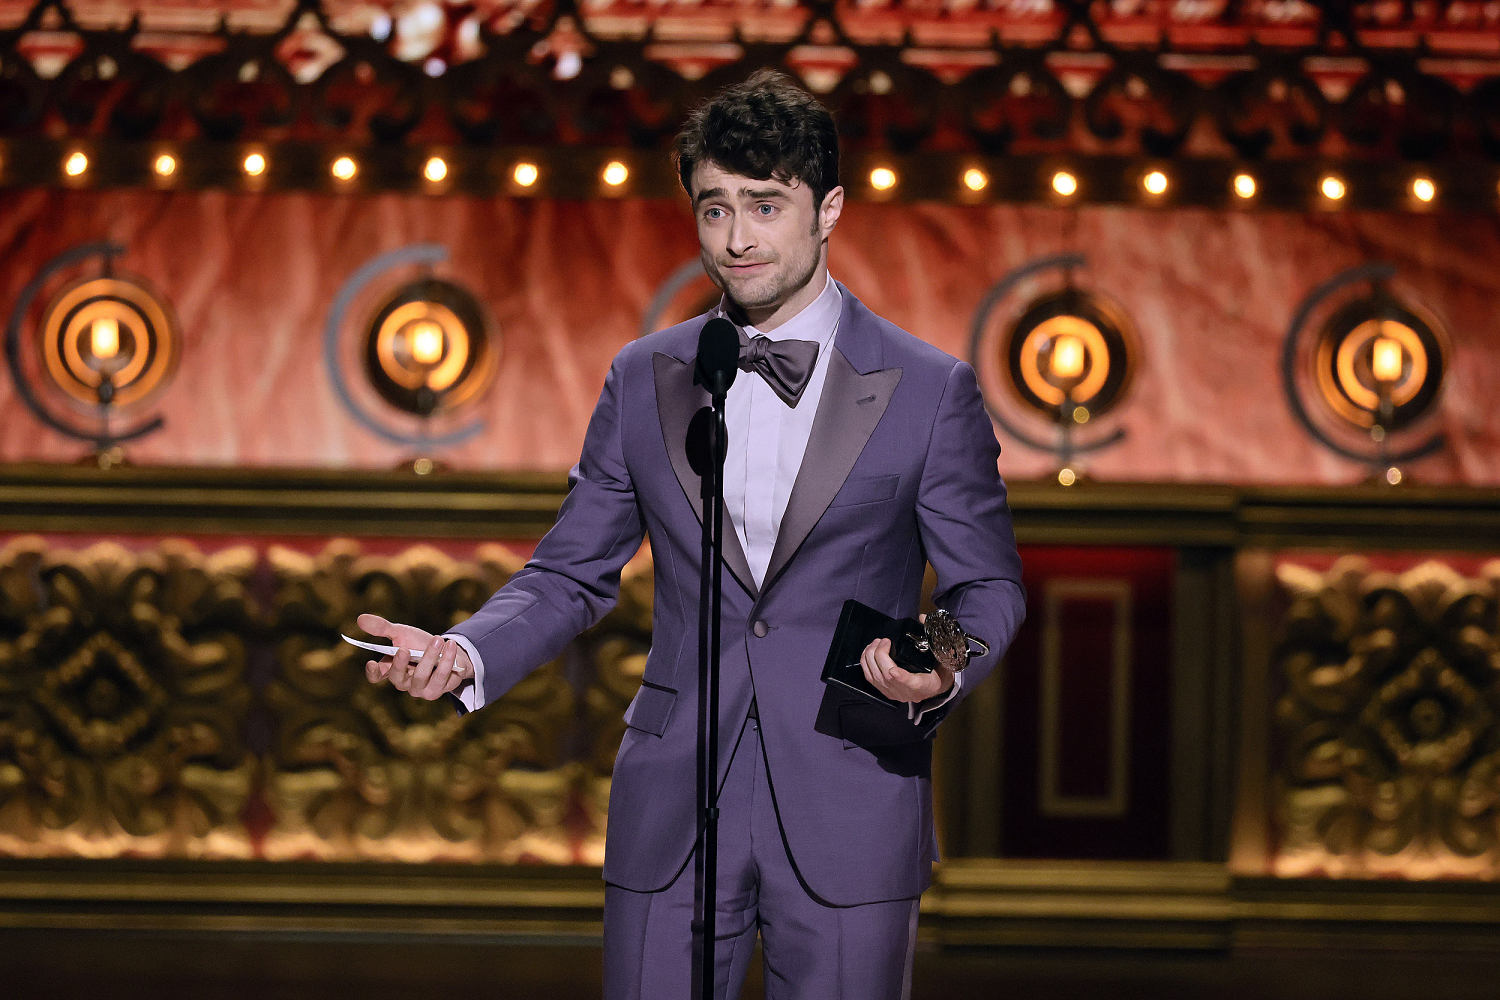 Daniel Radcliffe wins Tony award for 'Merrily We Roll Along'